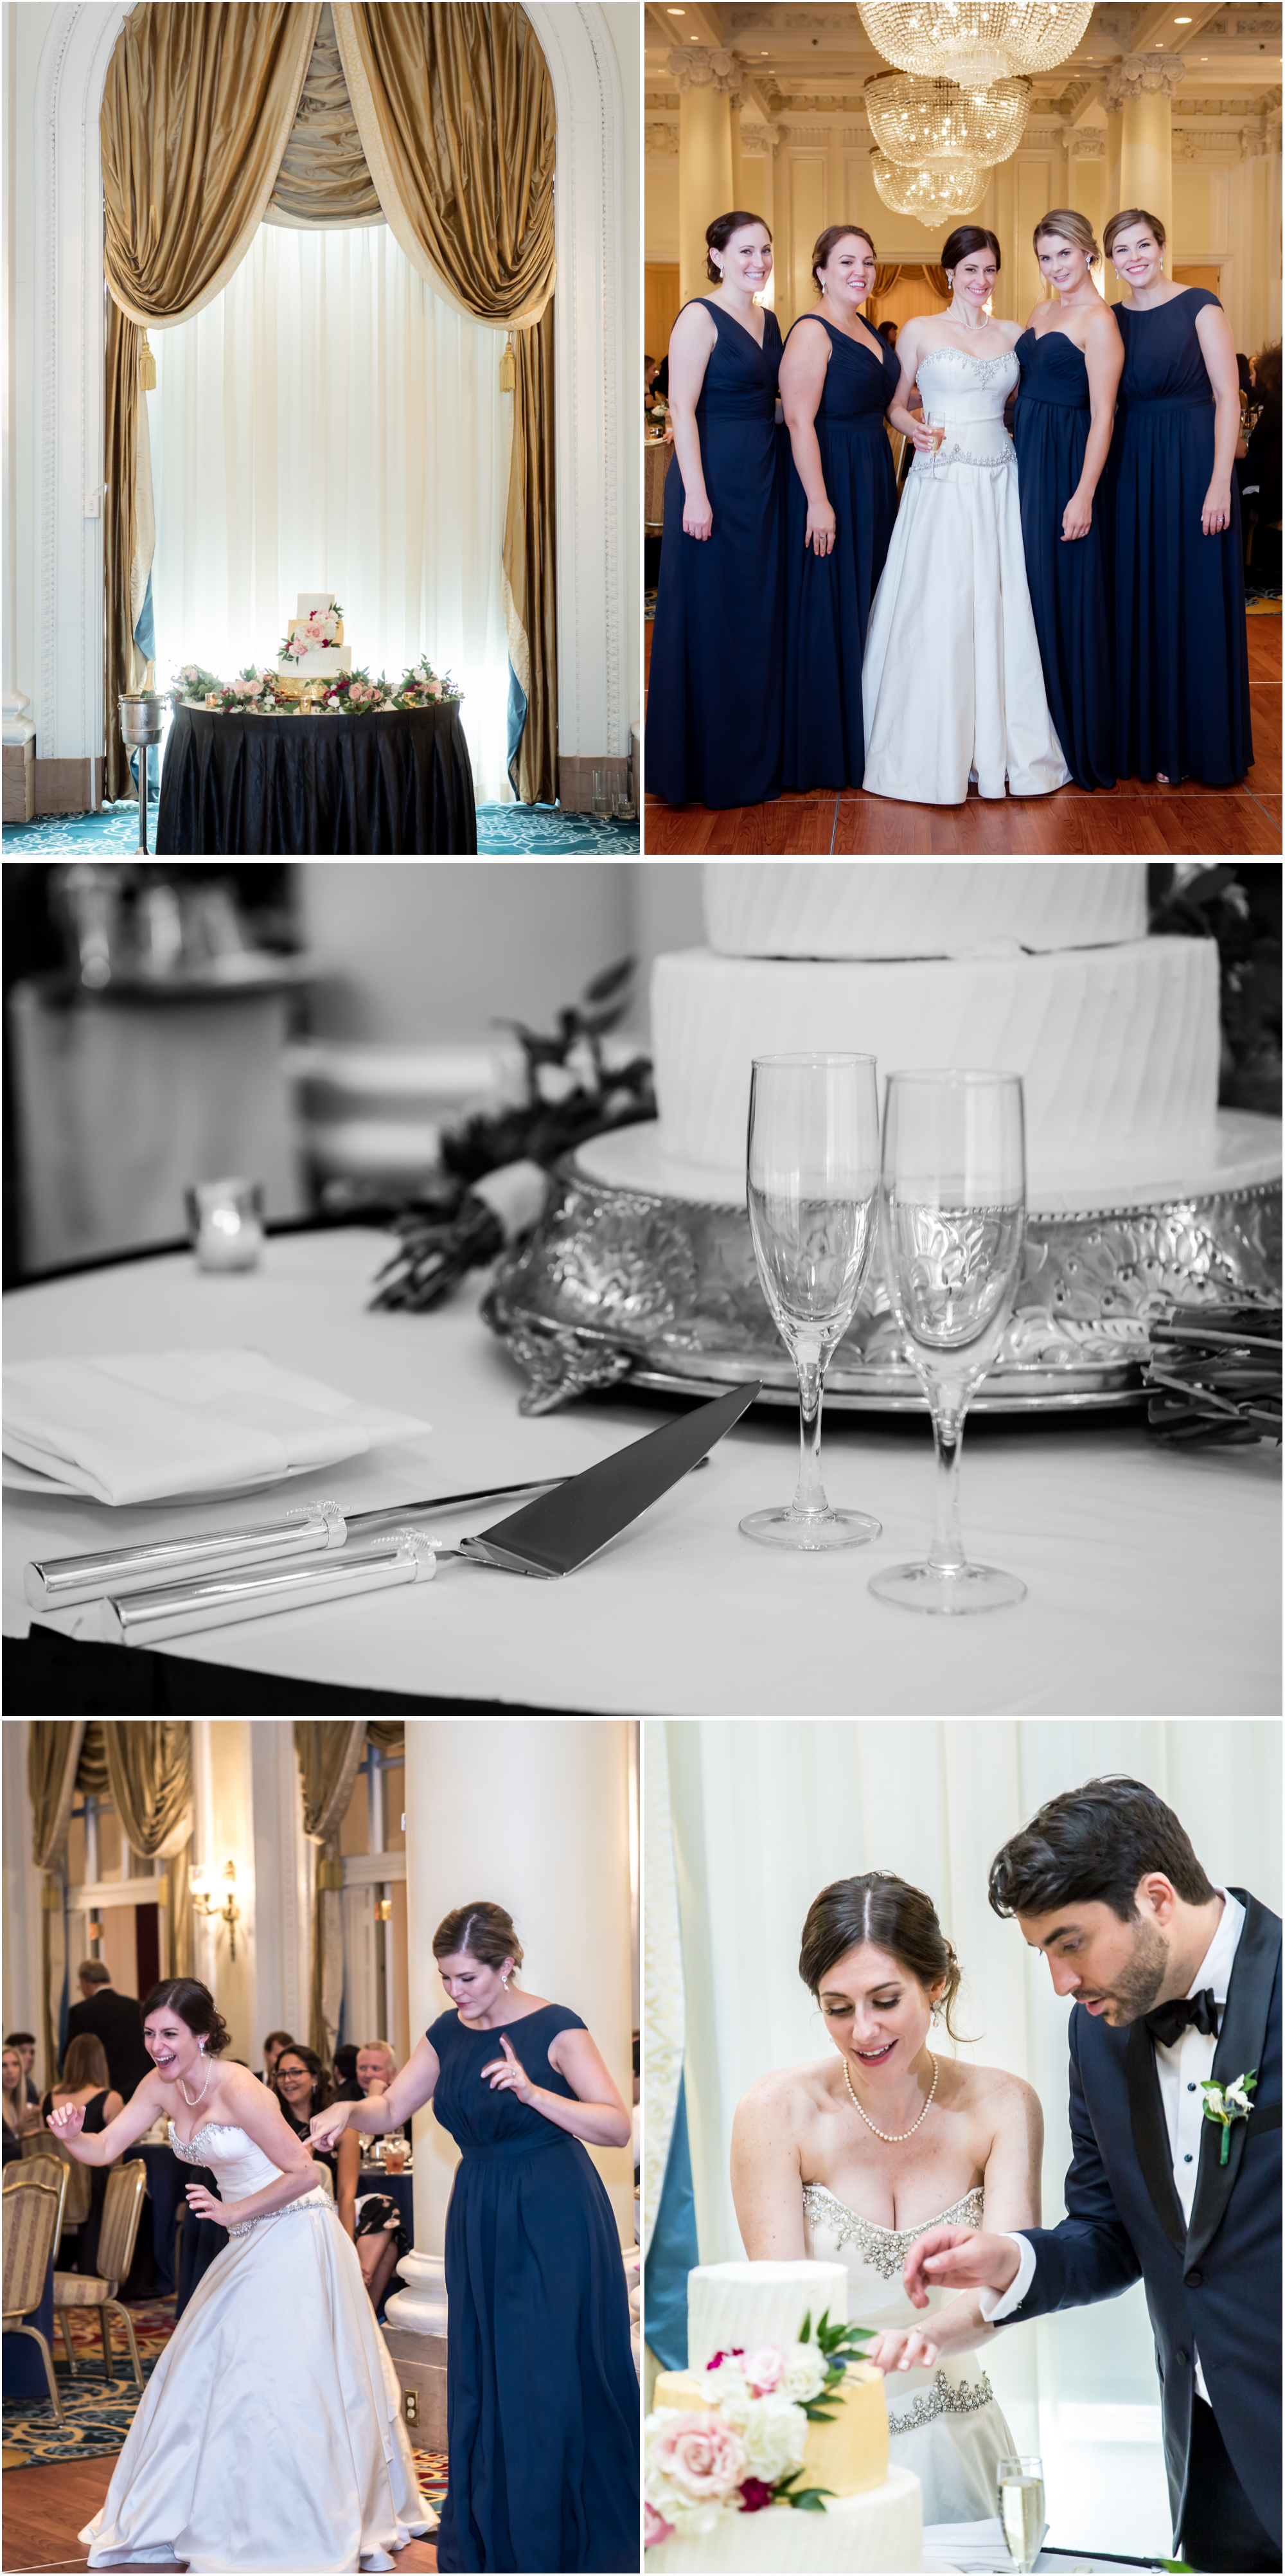 Stunning wedding reception photography at the Jefferson Hotel